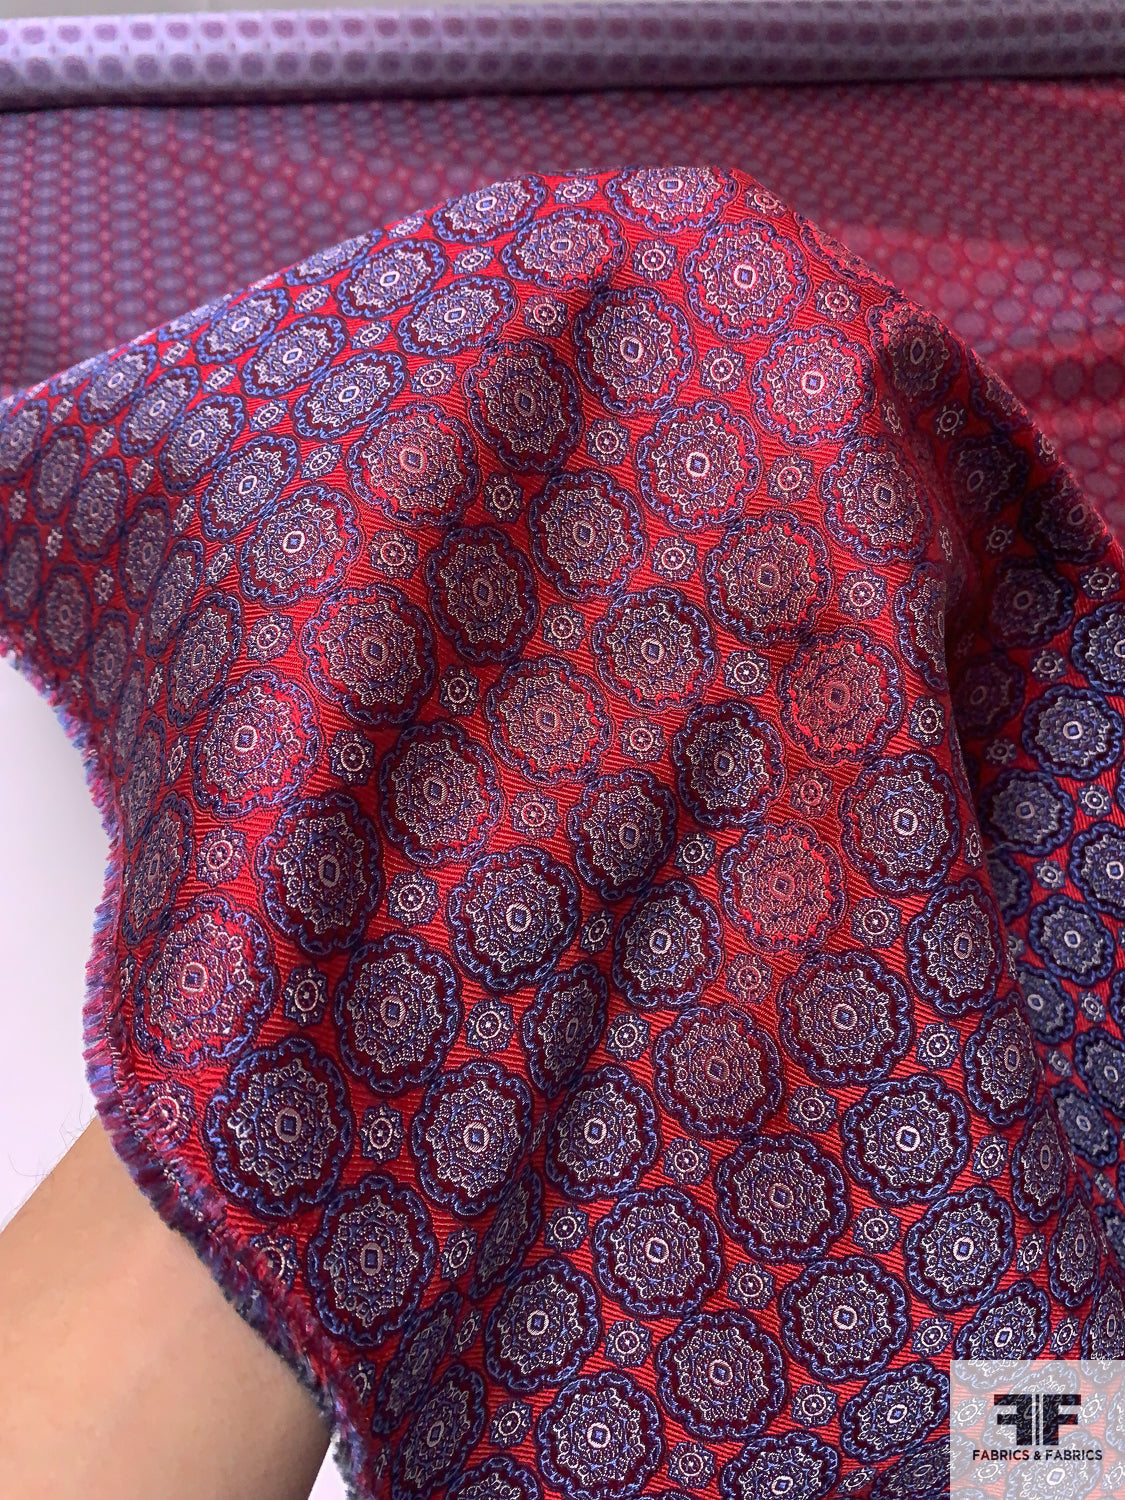 Ornate Circles Silk Necktie Jacquard Brocade - Red / Blue / Grey